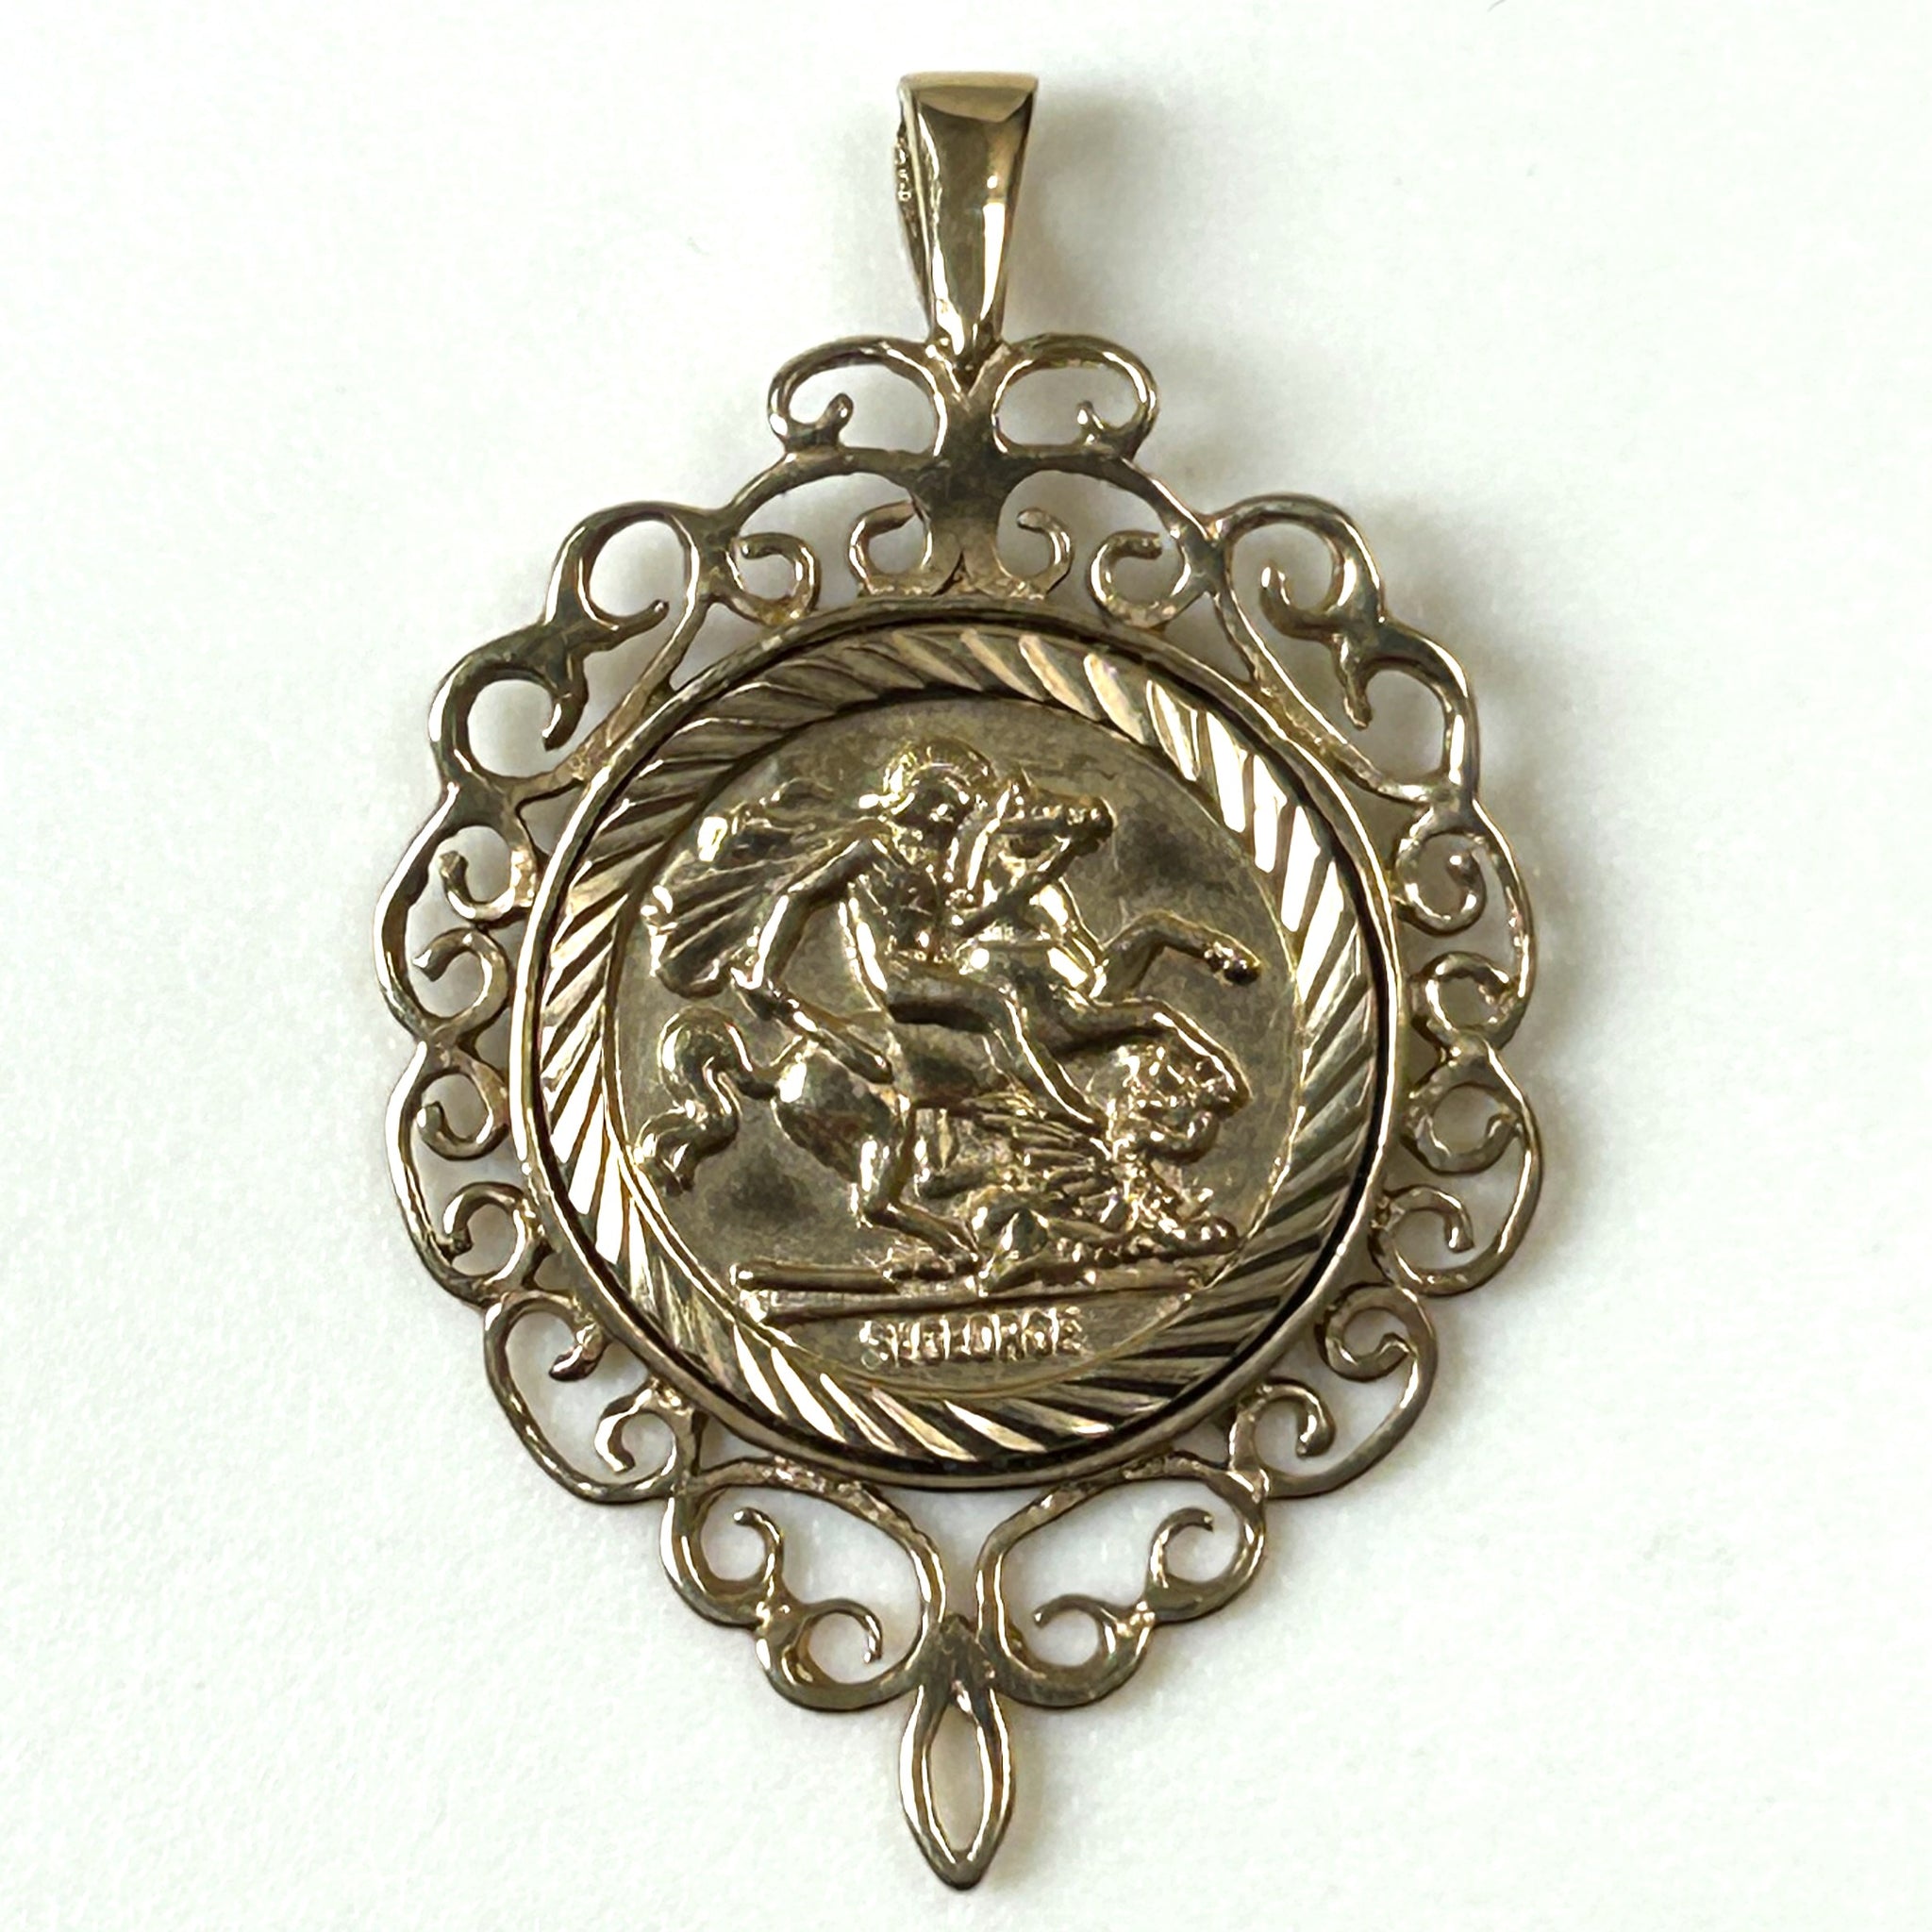 Vintage 9ct Gold “St George” Pendant